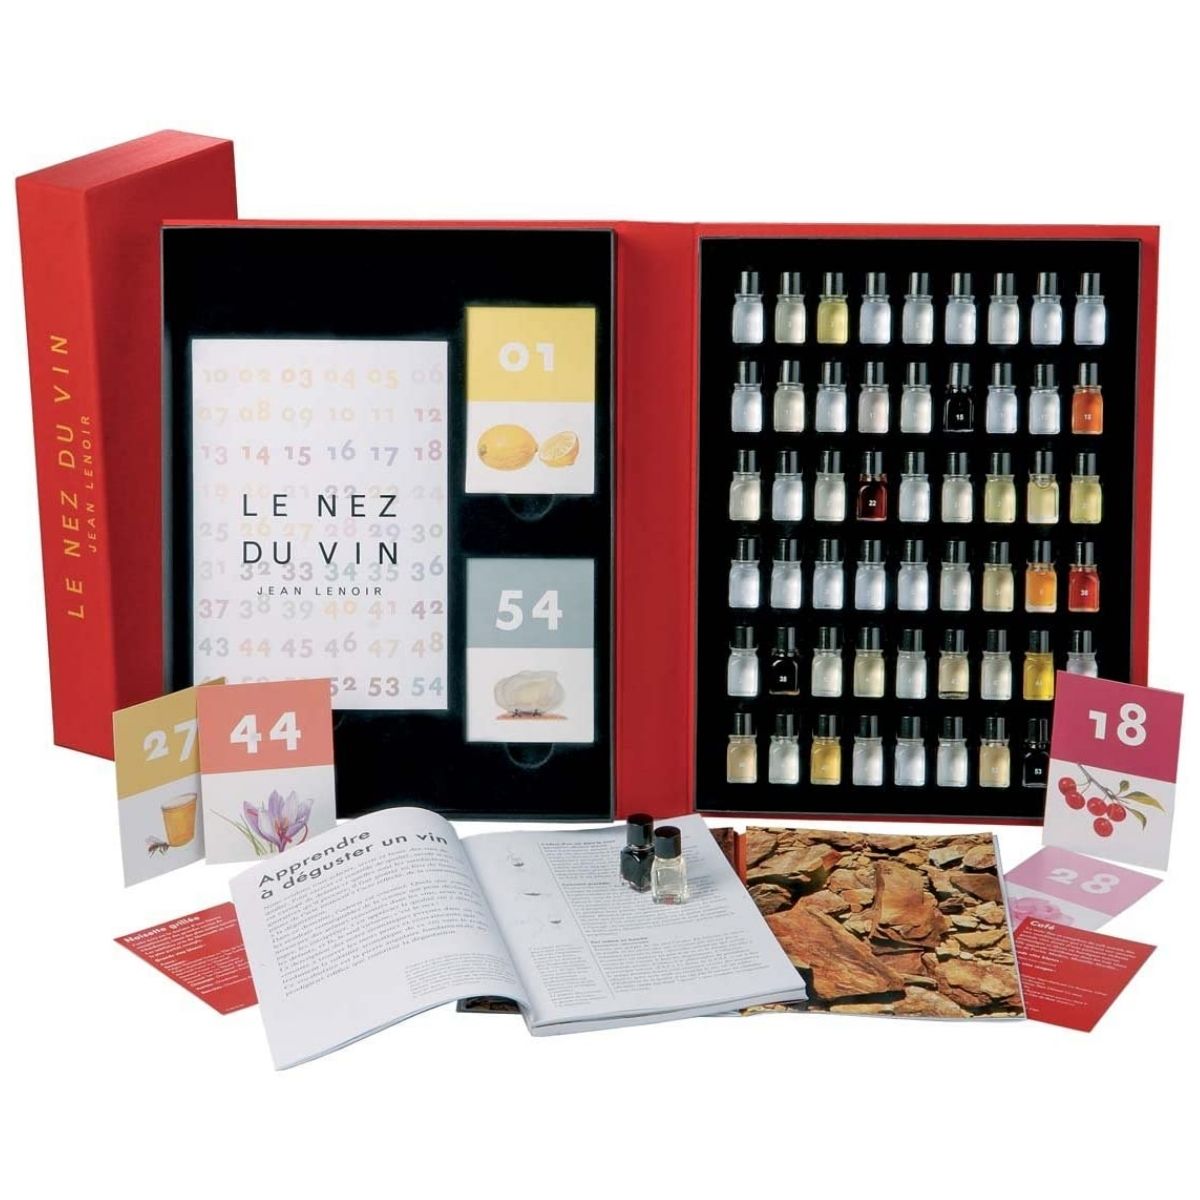 The Best Gifts for Wine Lovers Option: Le nez du vin 54 Wine Aroma - Master Kit